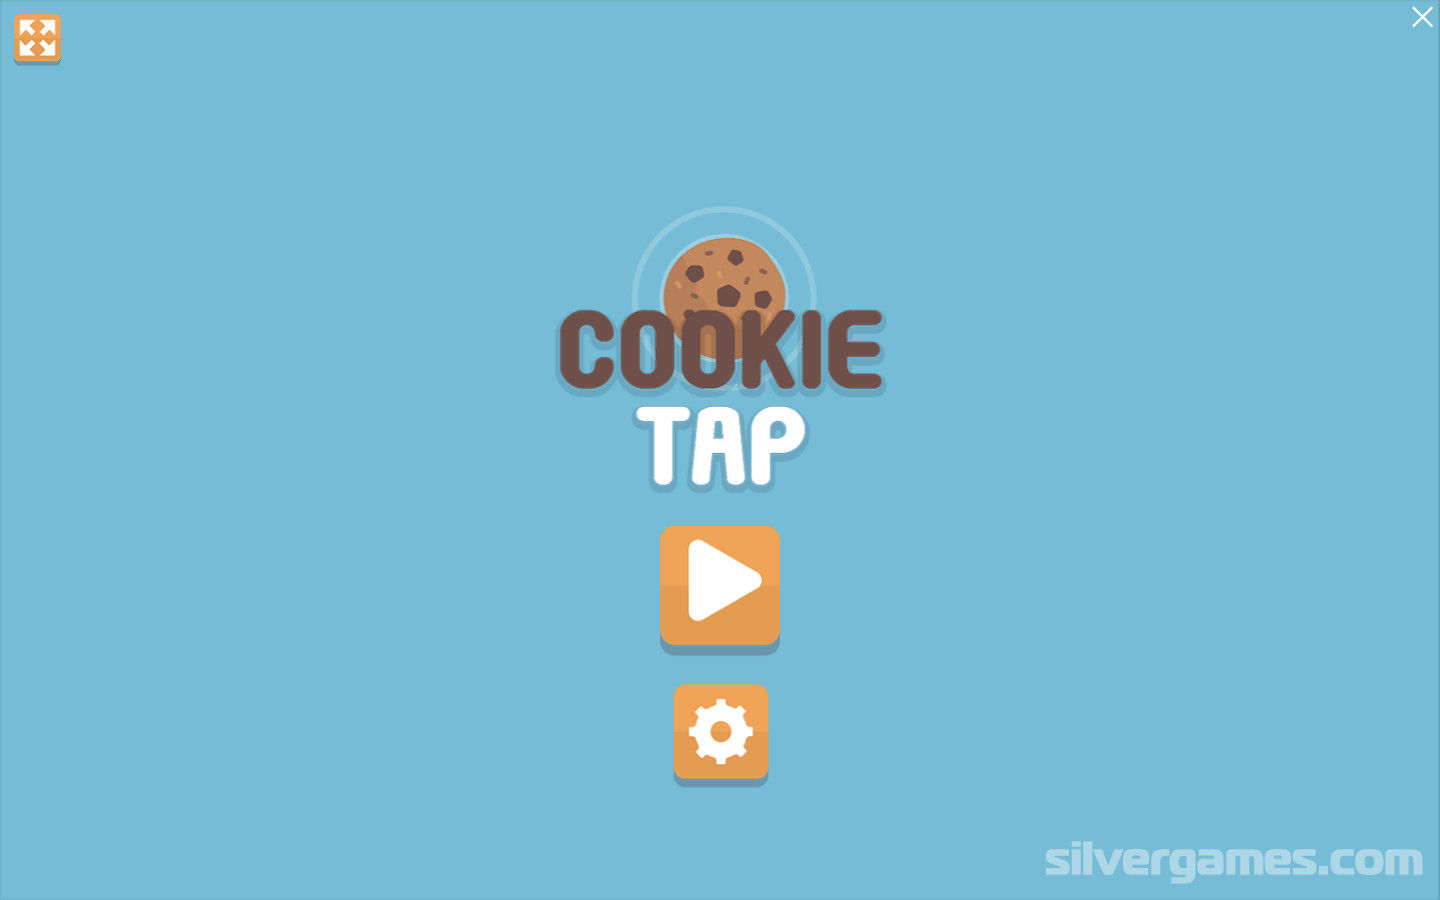 Cookie Clicker Gameplay 